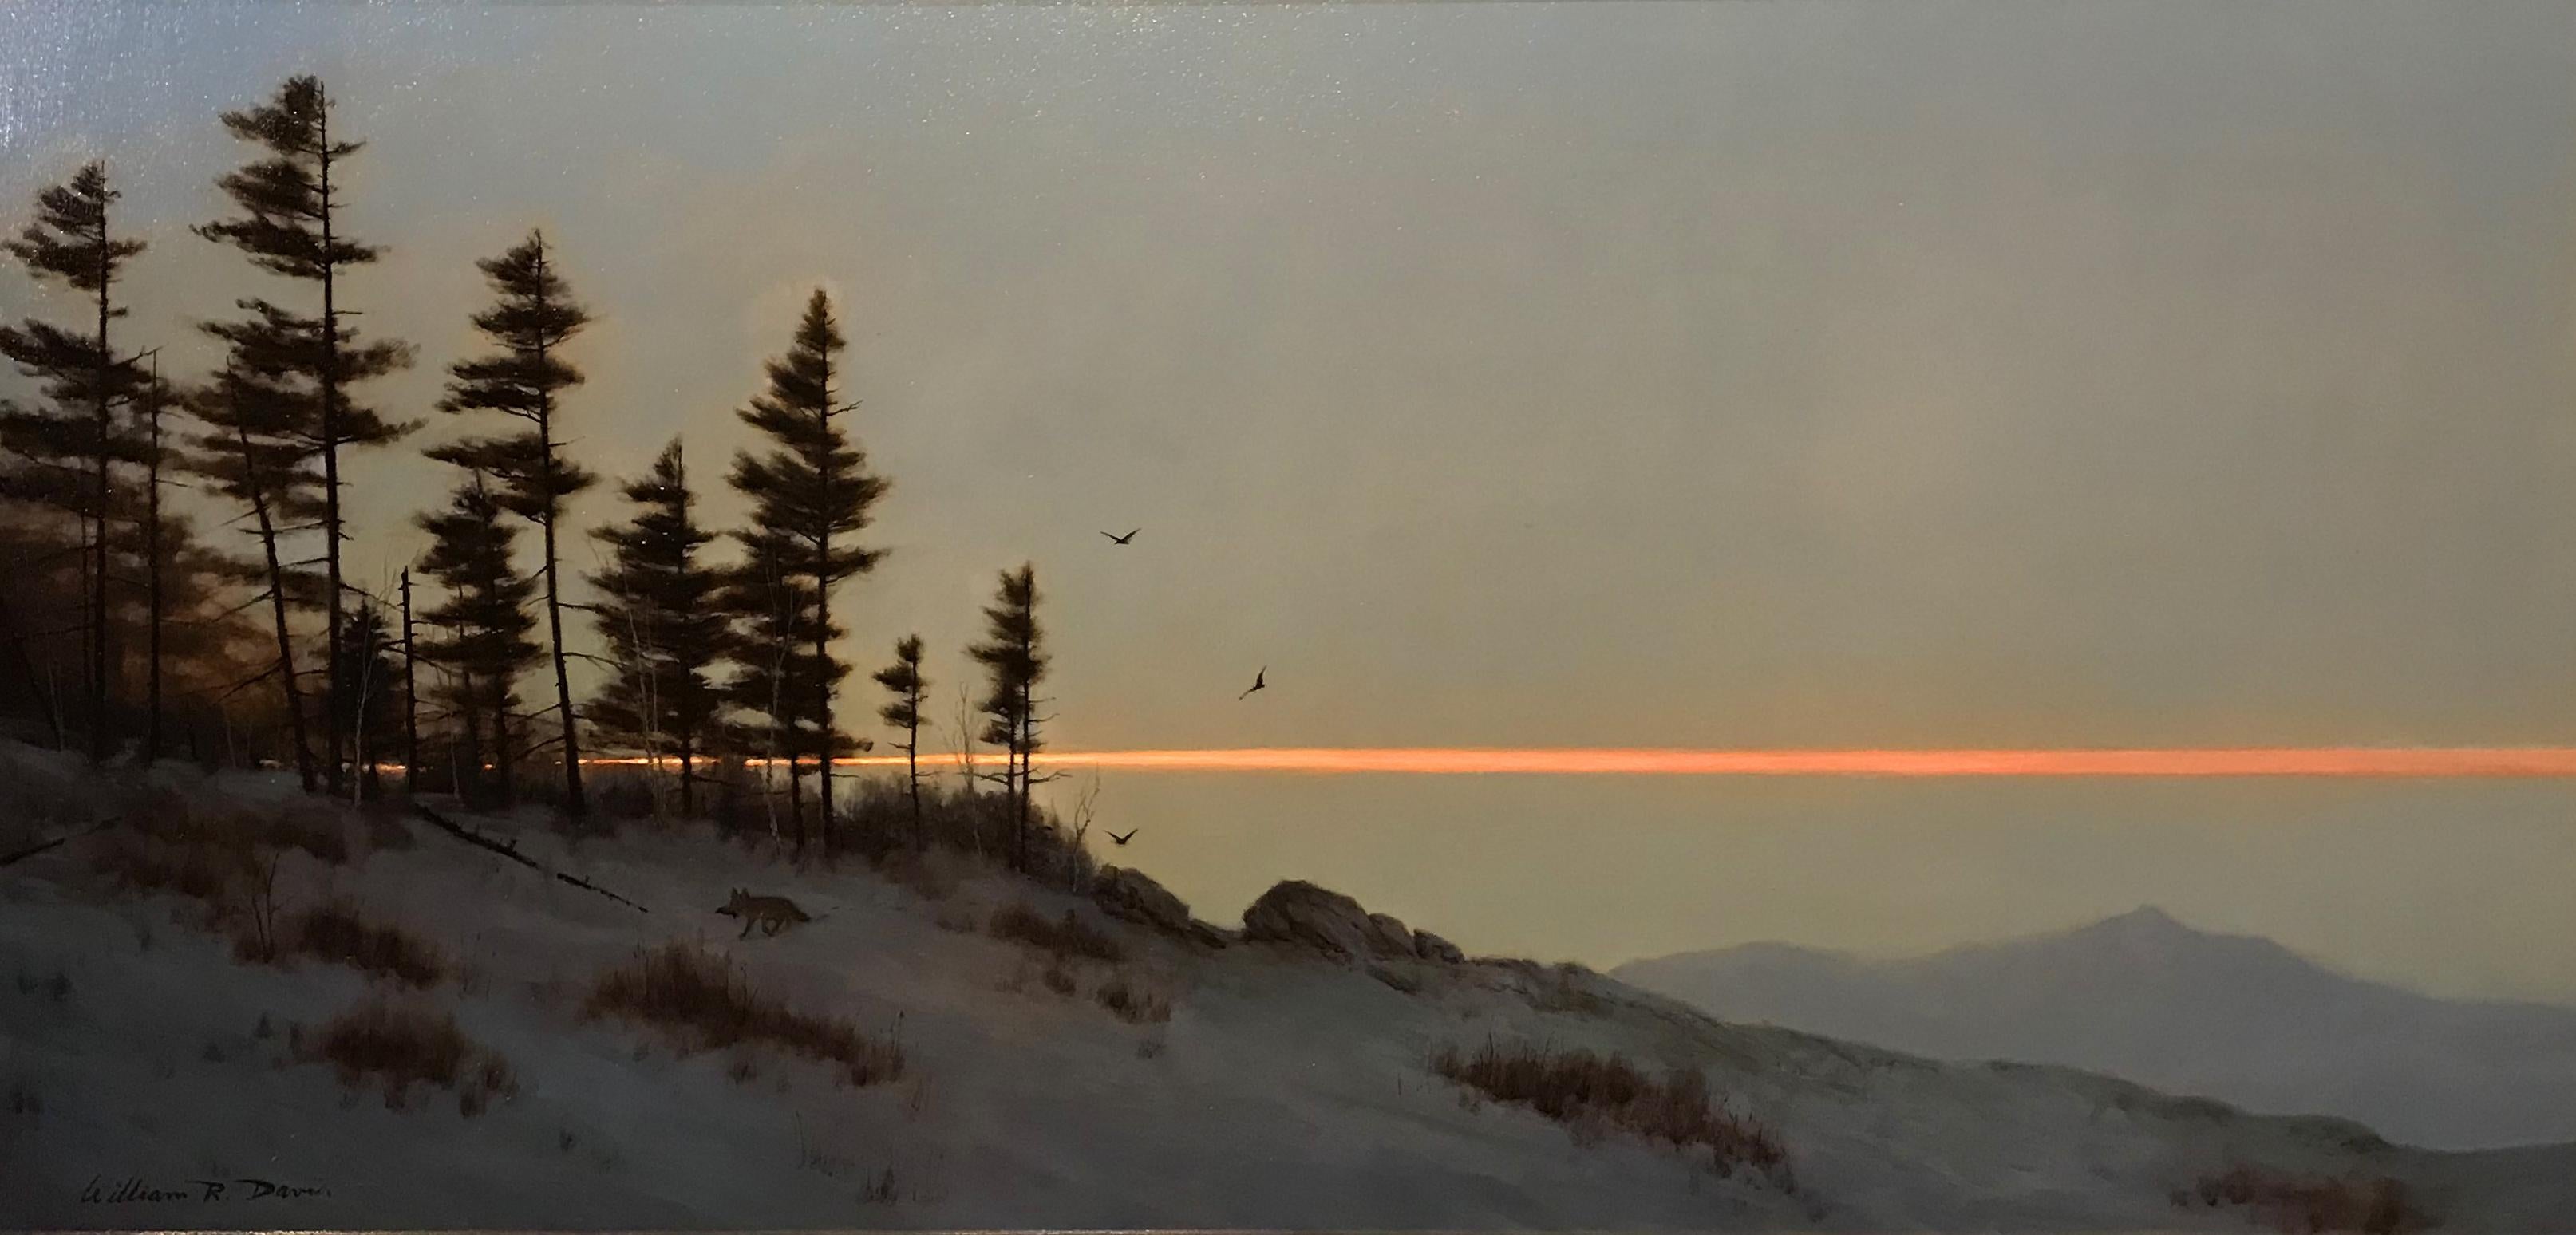 Chocorua at Twilight - Painting by William R. Davis